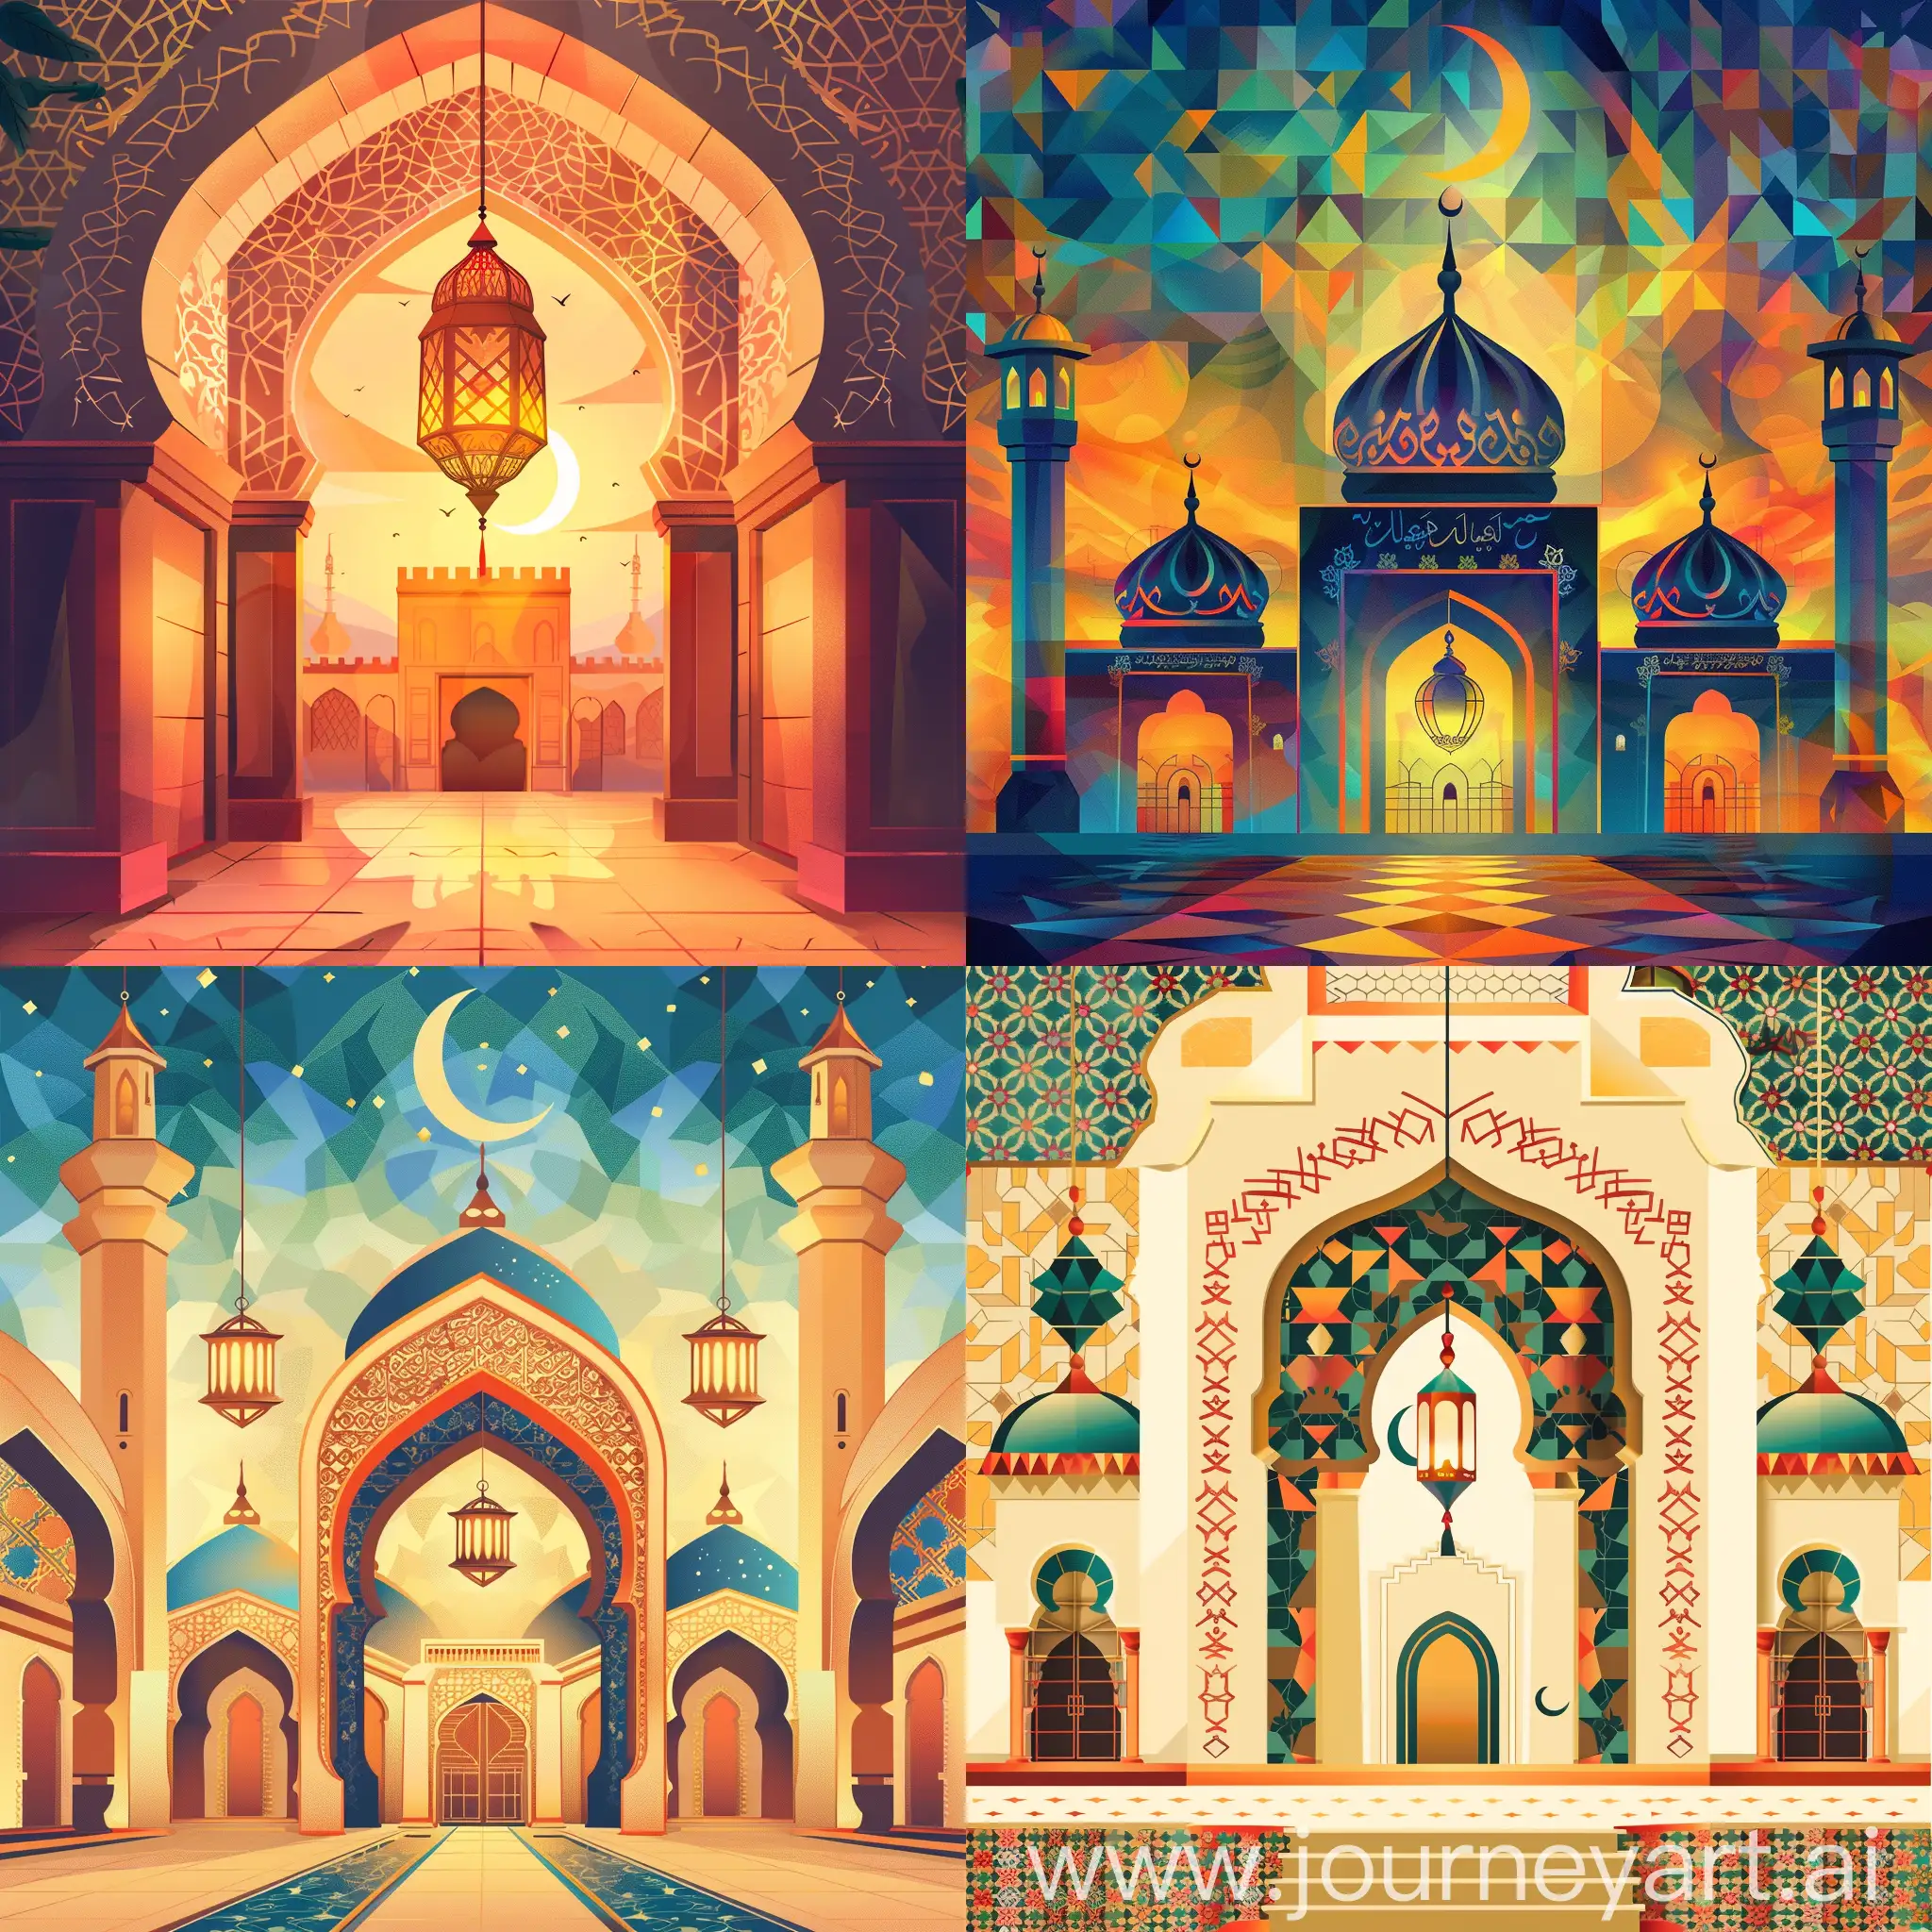 Ramadan-Lantern-Festival-Greeting-Card-with-Geometric-Islamic-Pattern-Background